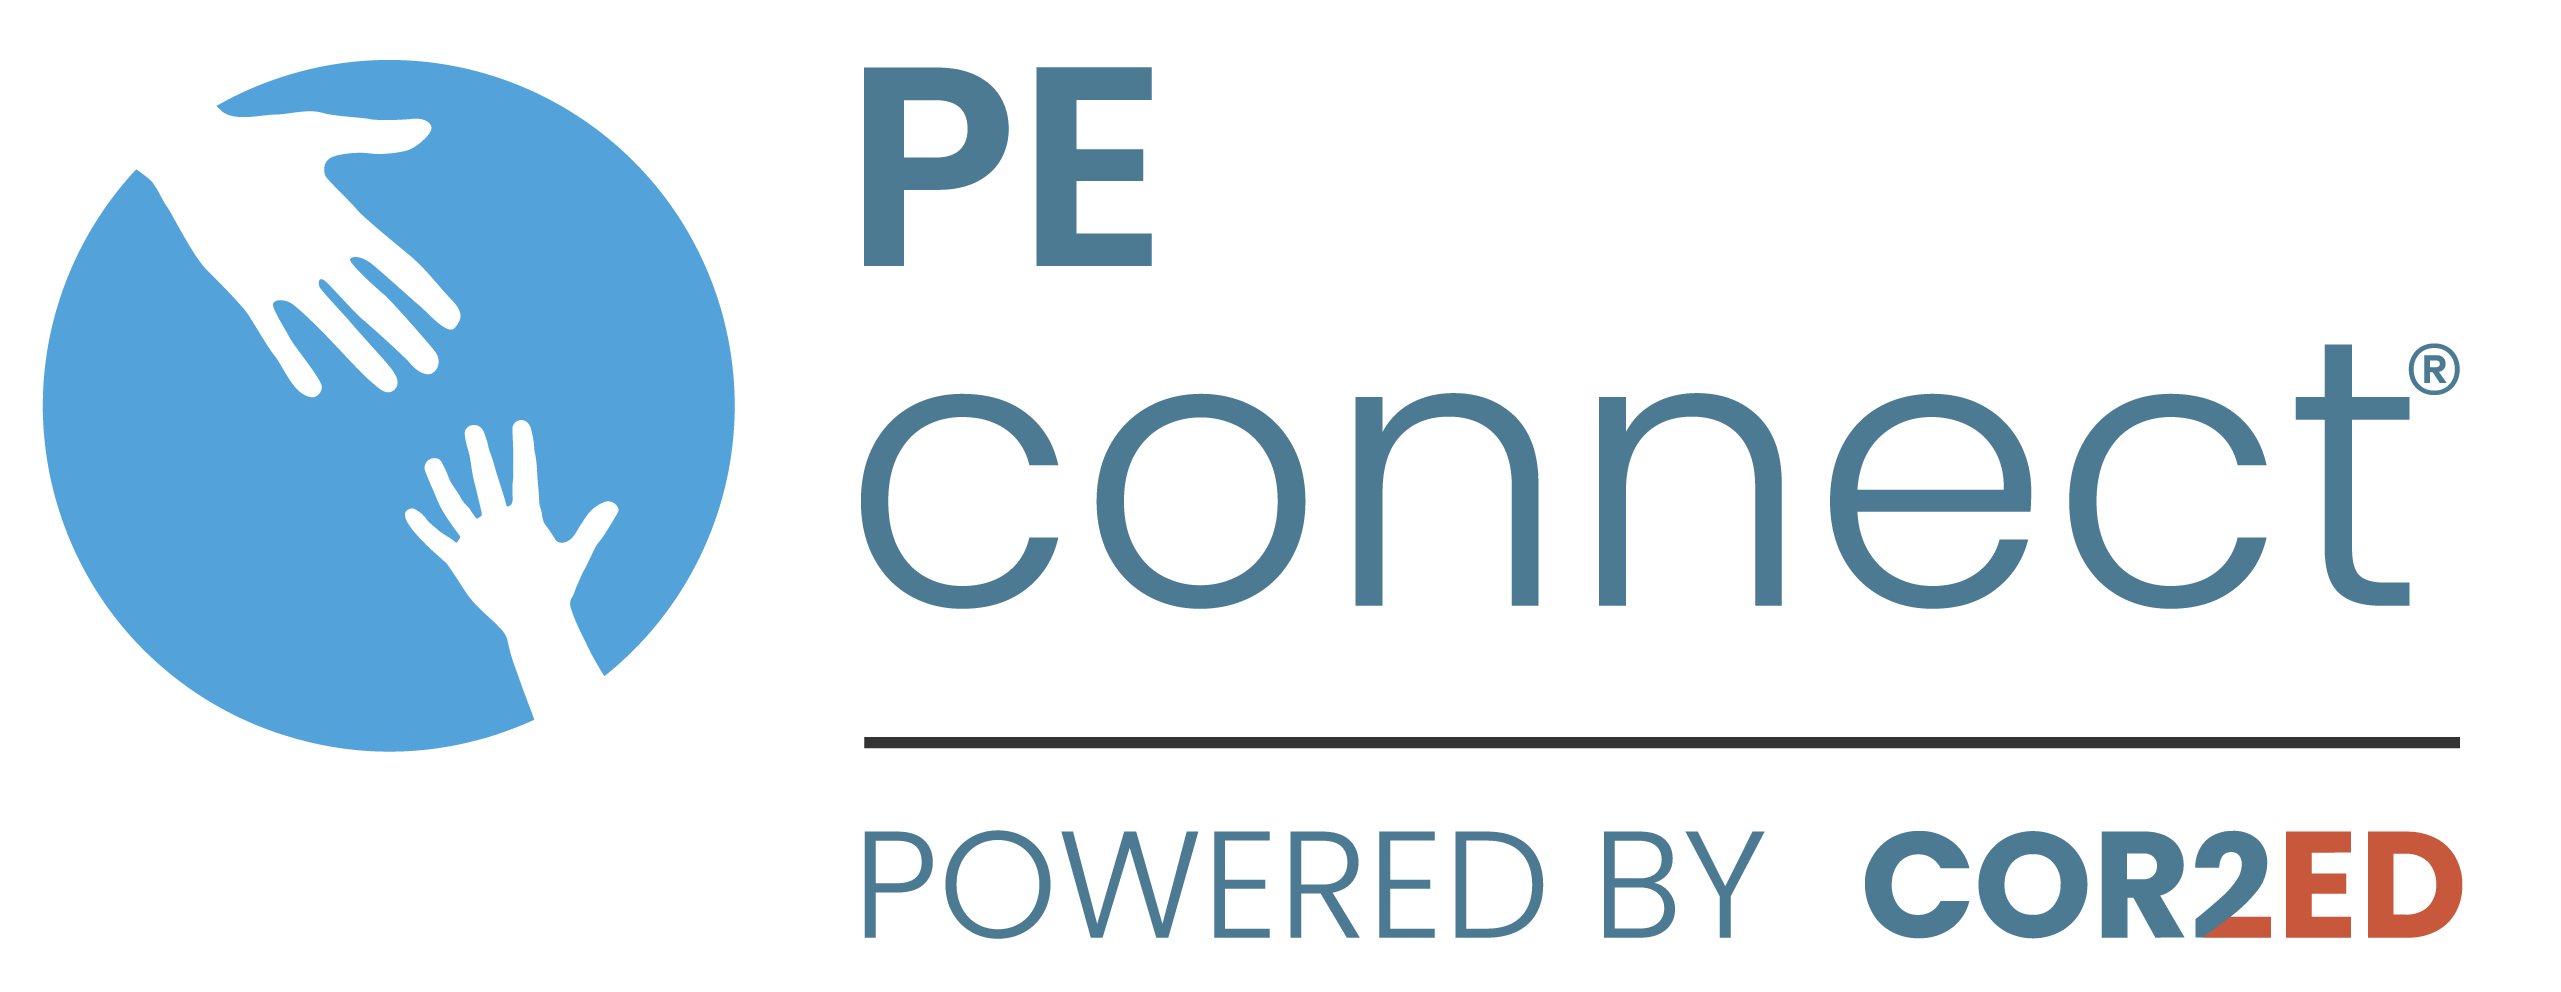 pe-connect-logo